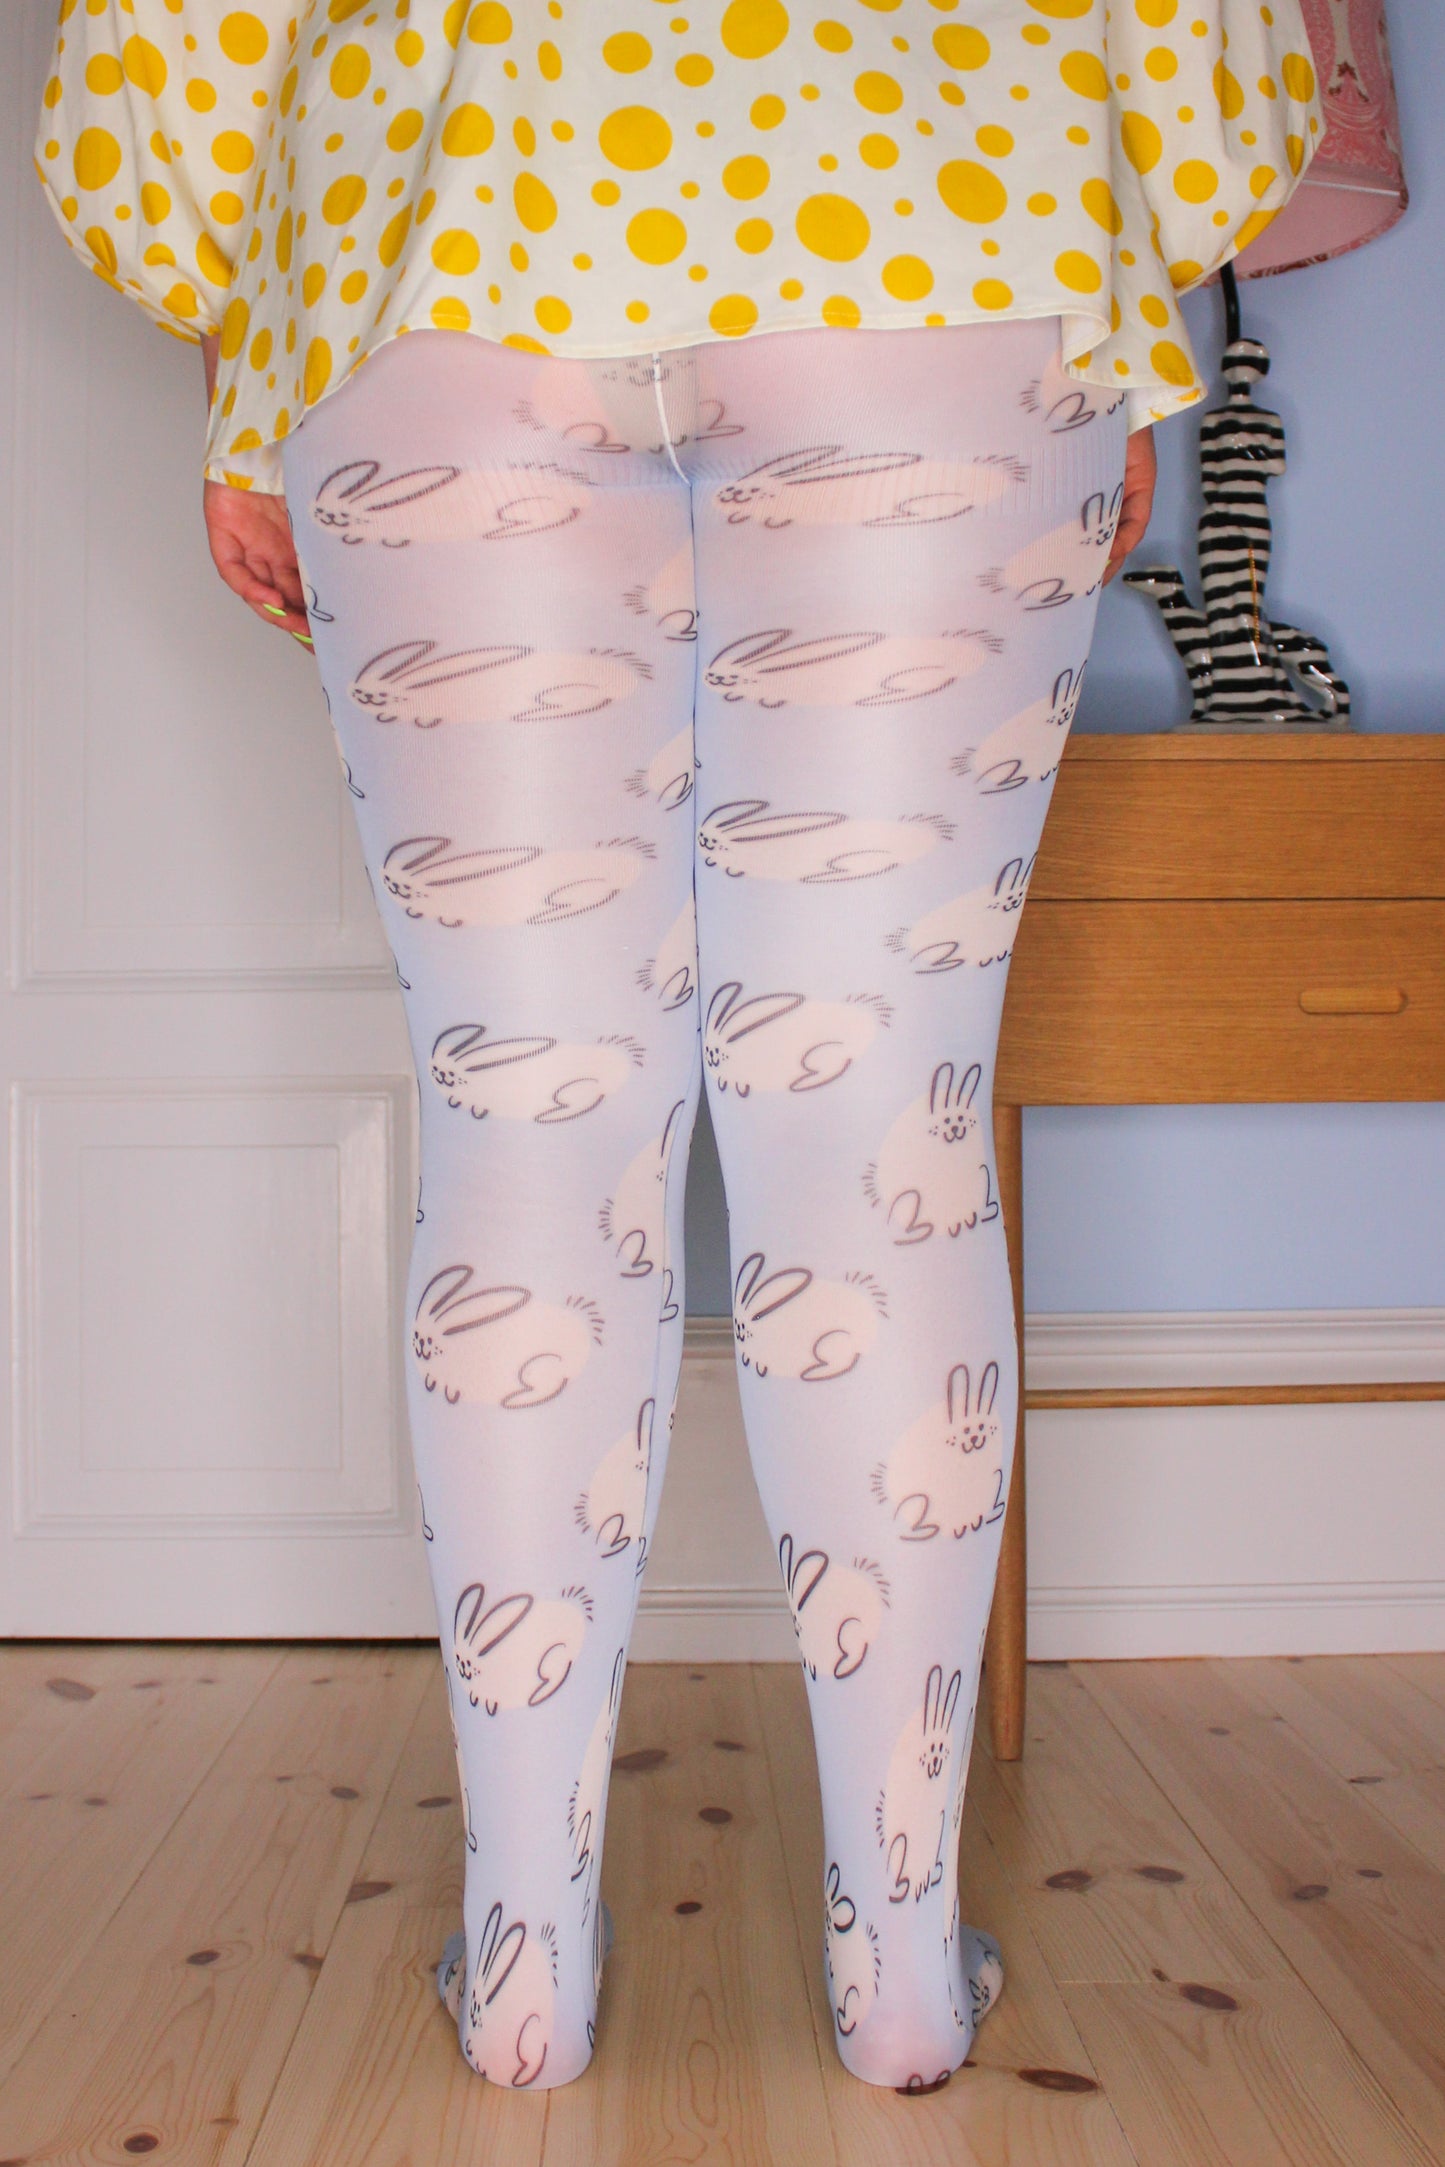 Fab Legs printed tights - Chubby Rabbits